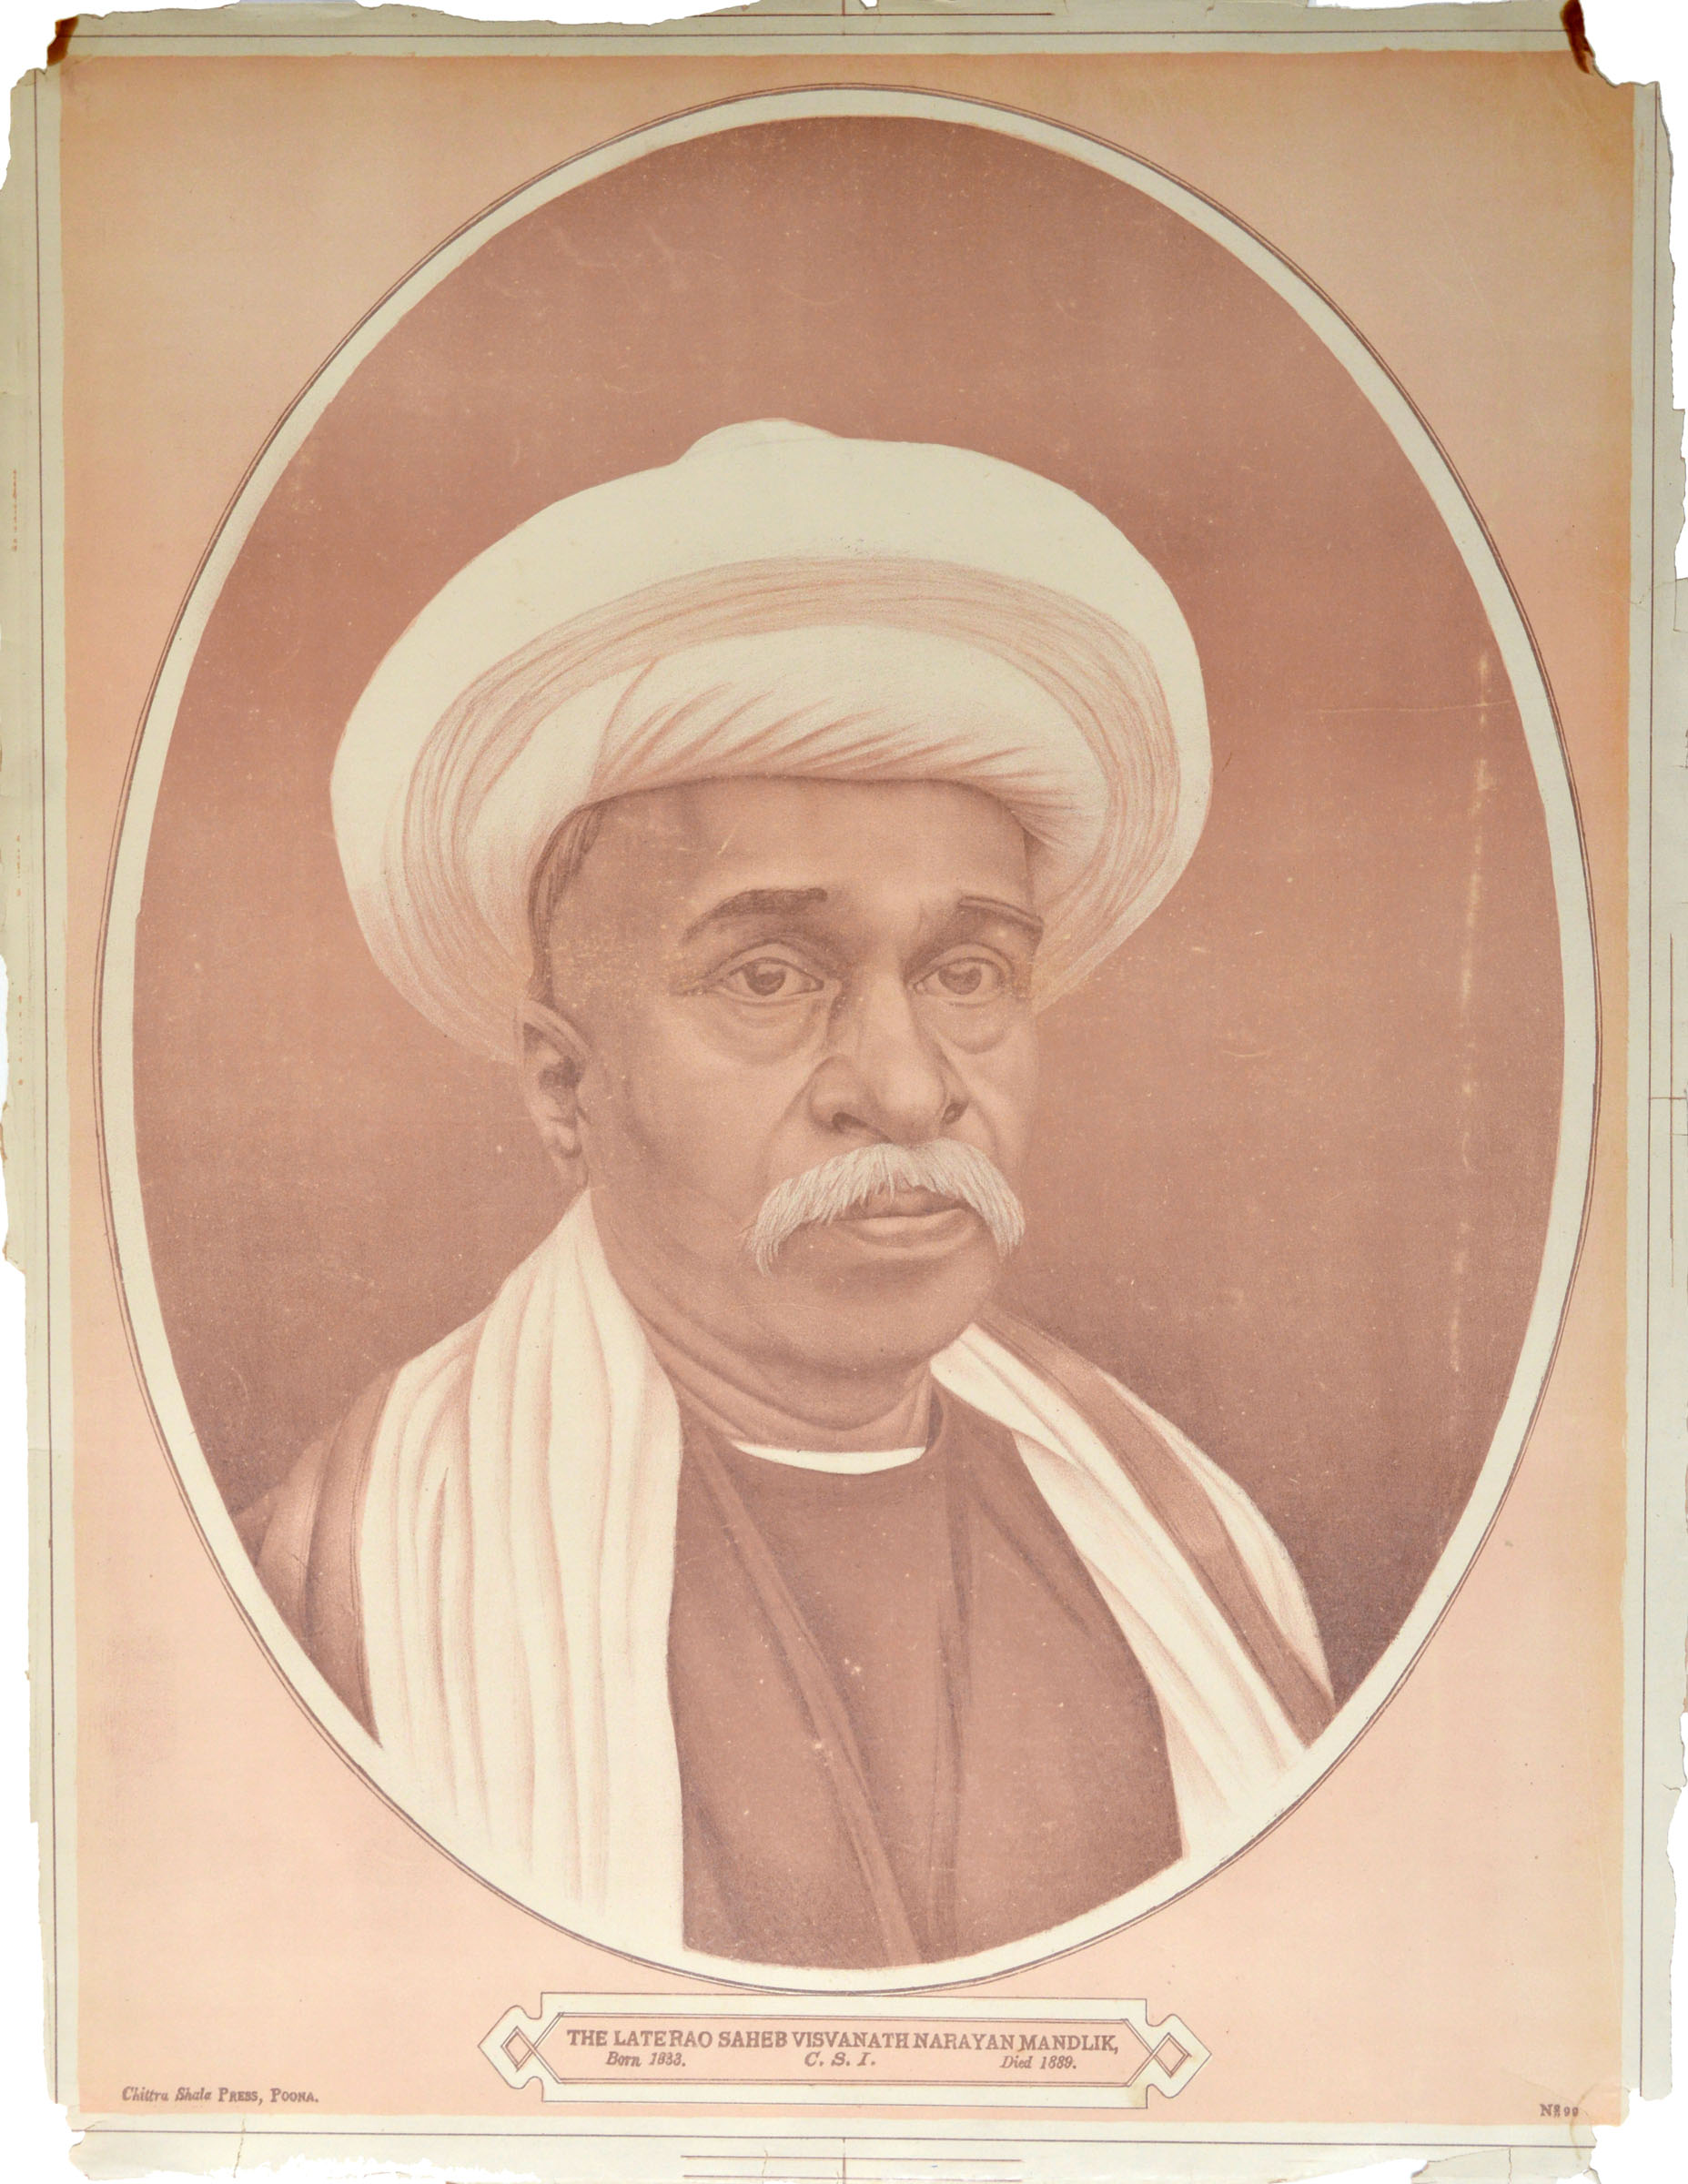 The Late Rao Saheb Visvanath Narayan Mandlik